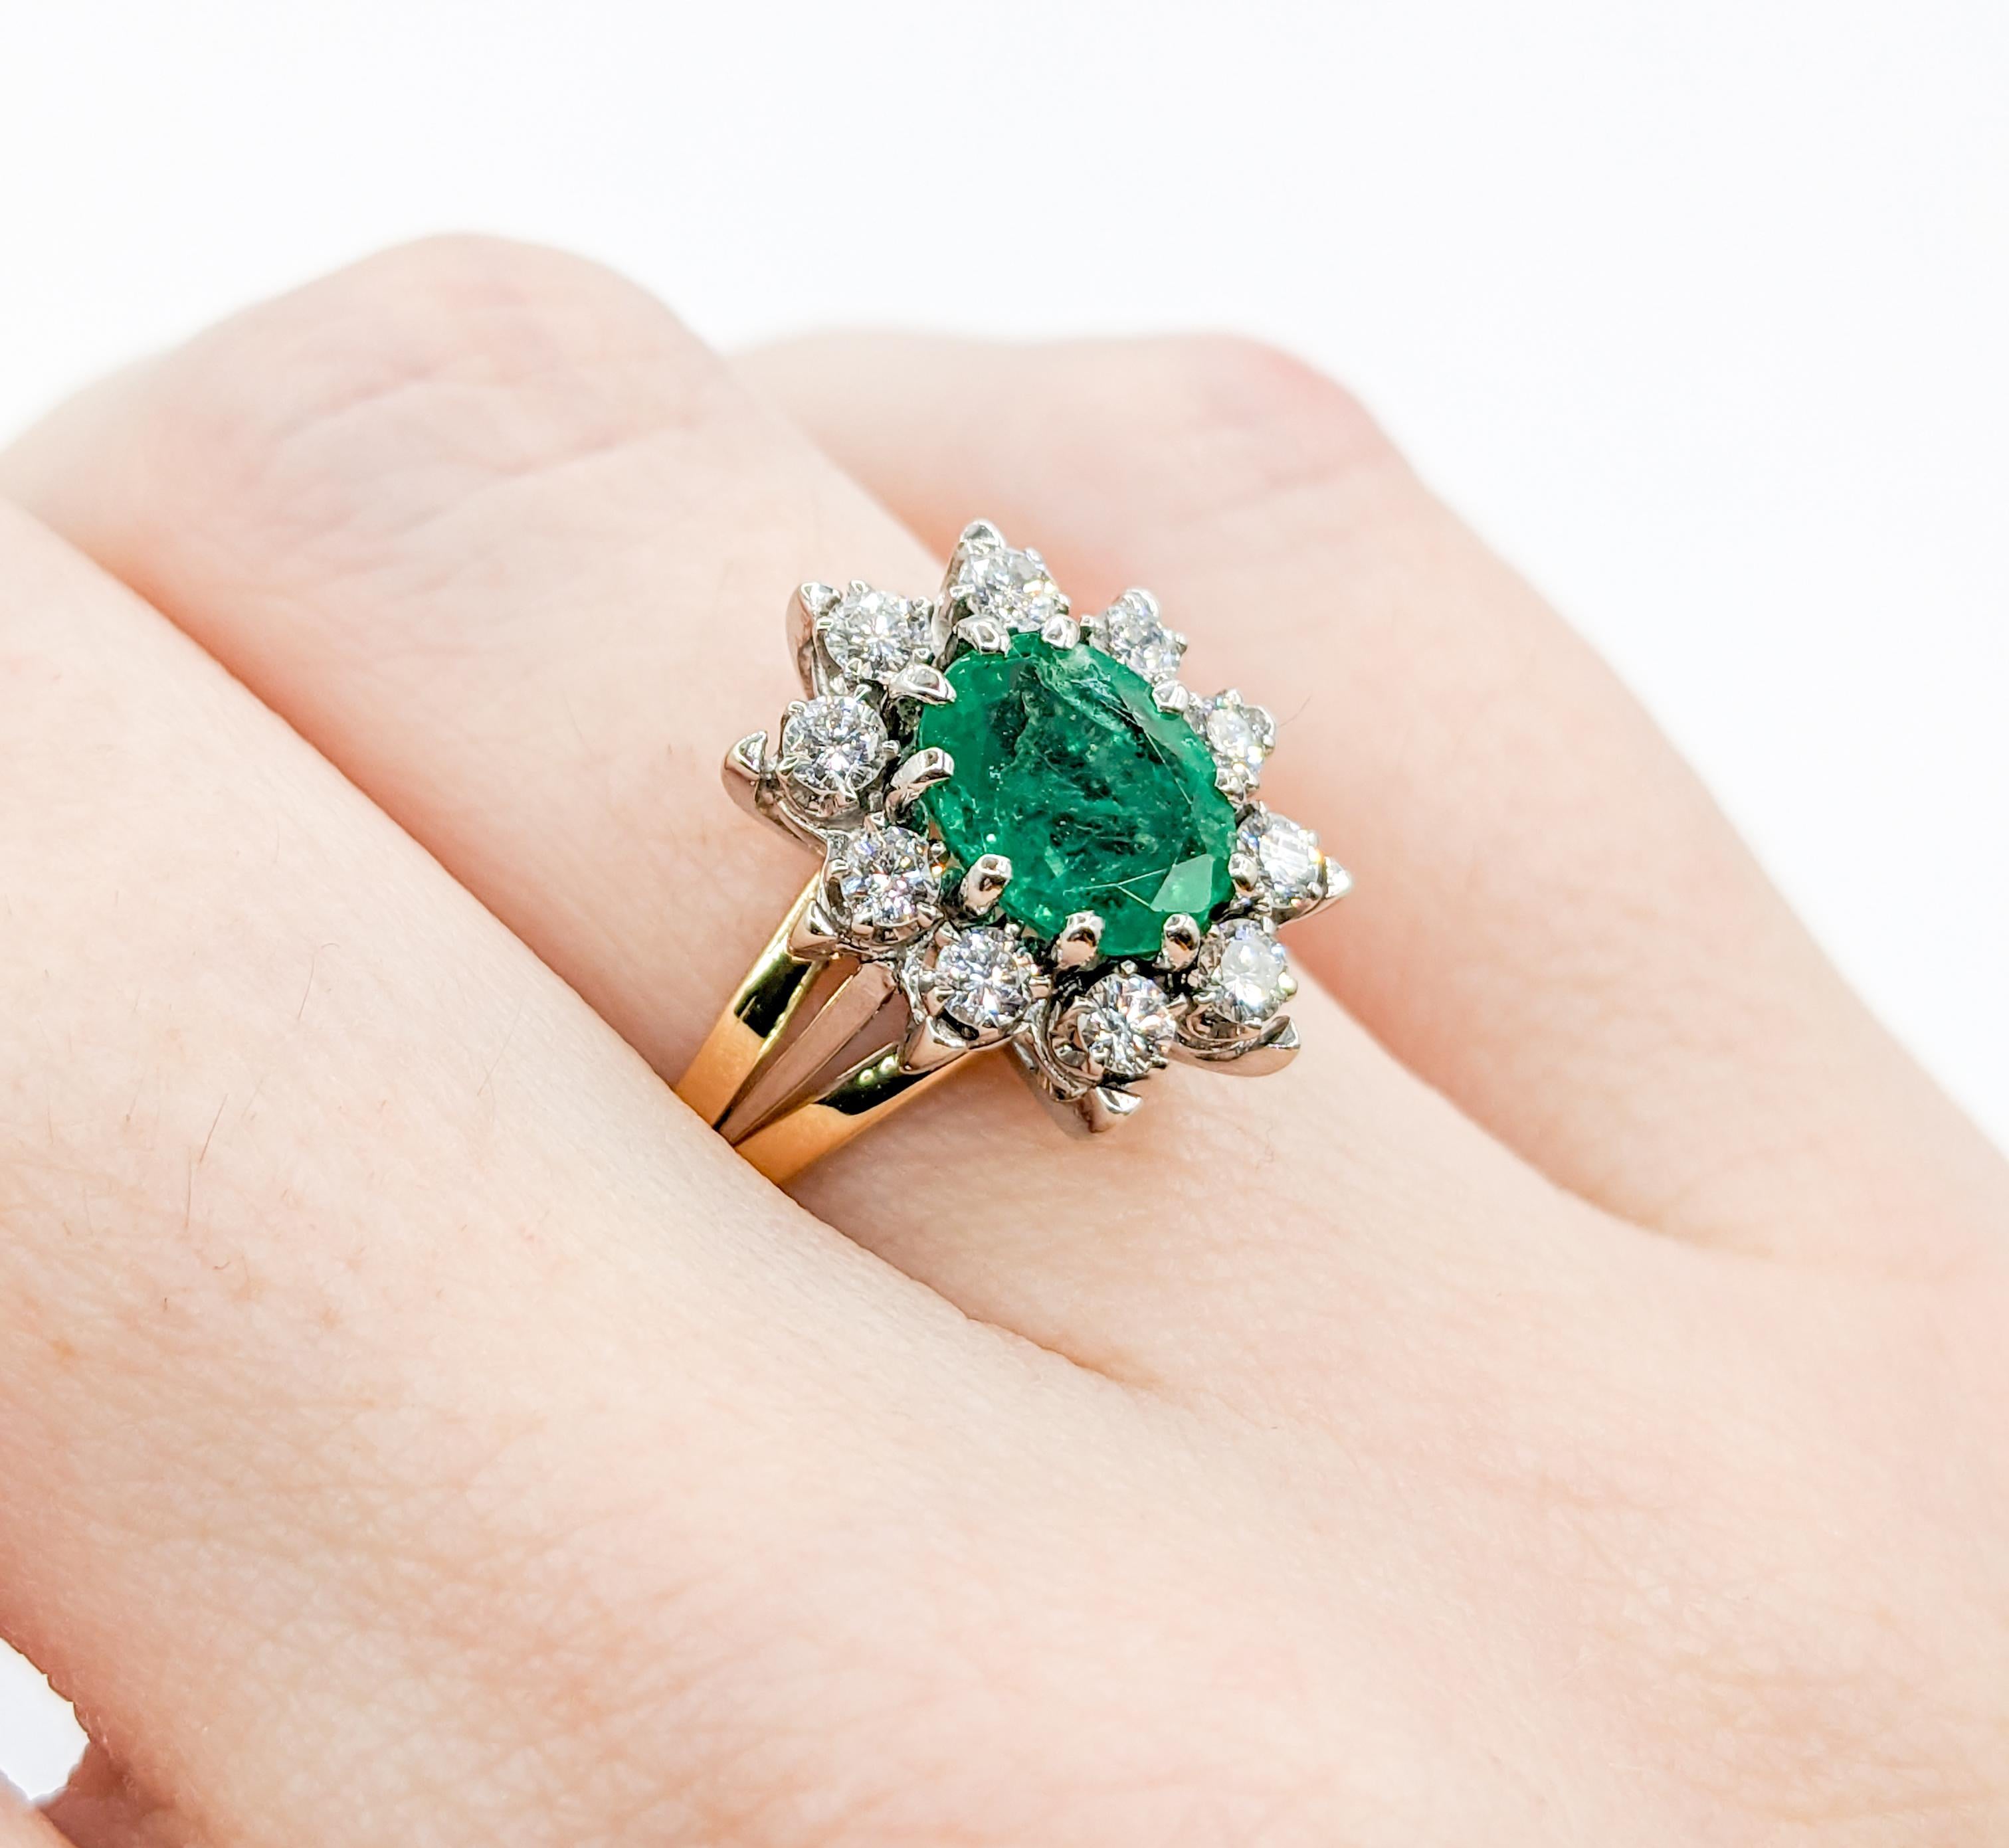 Oval Cut Emerald & Diamond Ring in 18K Gold